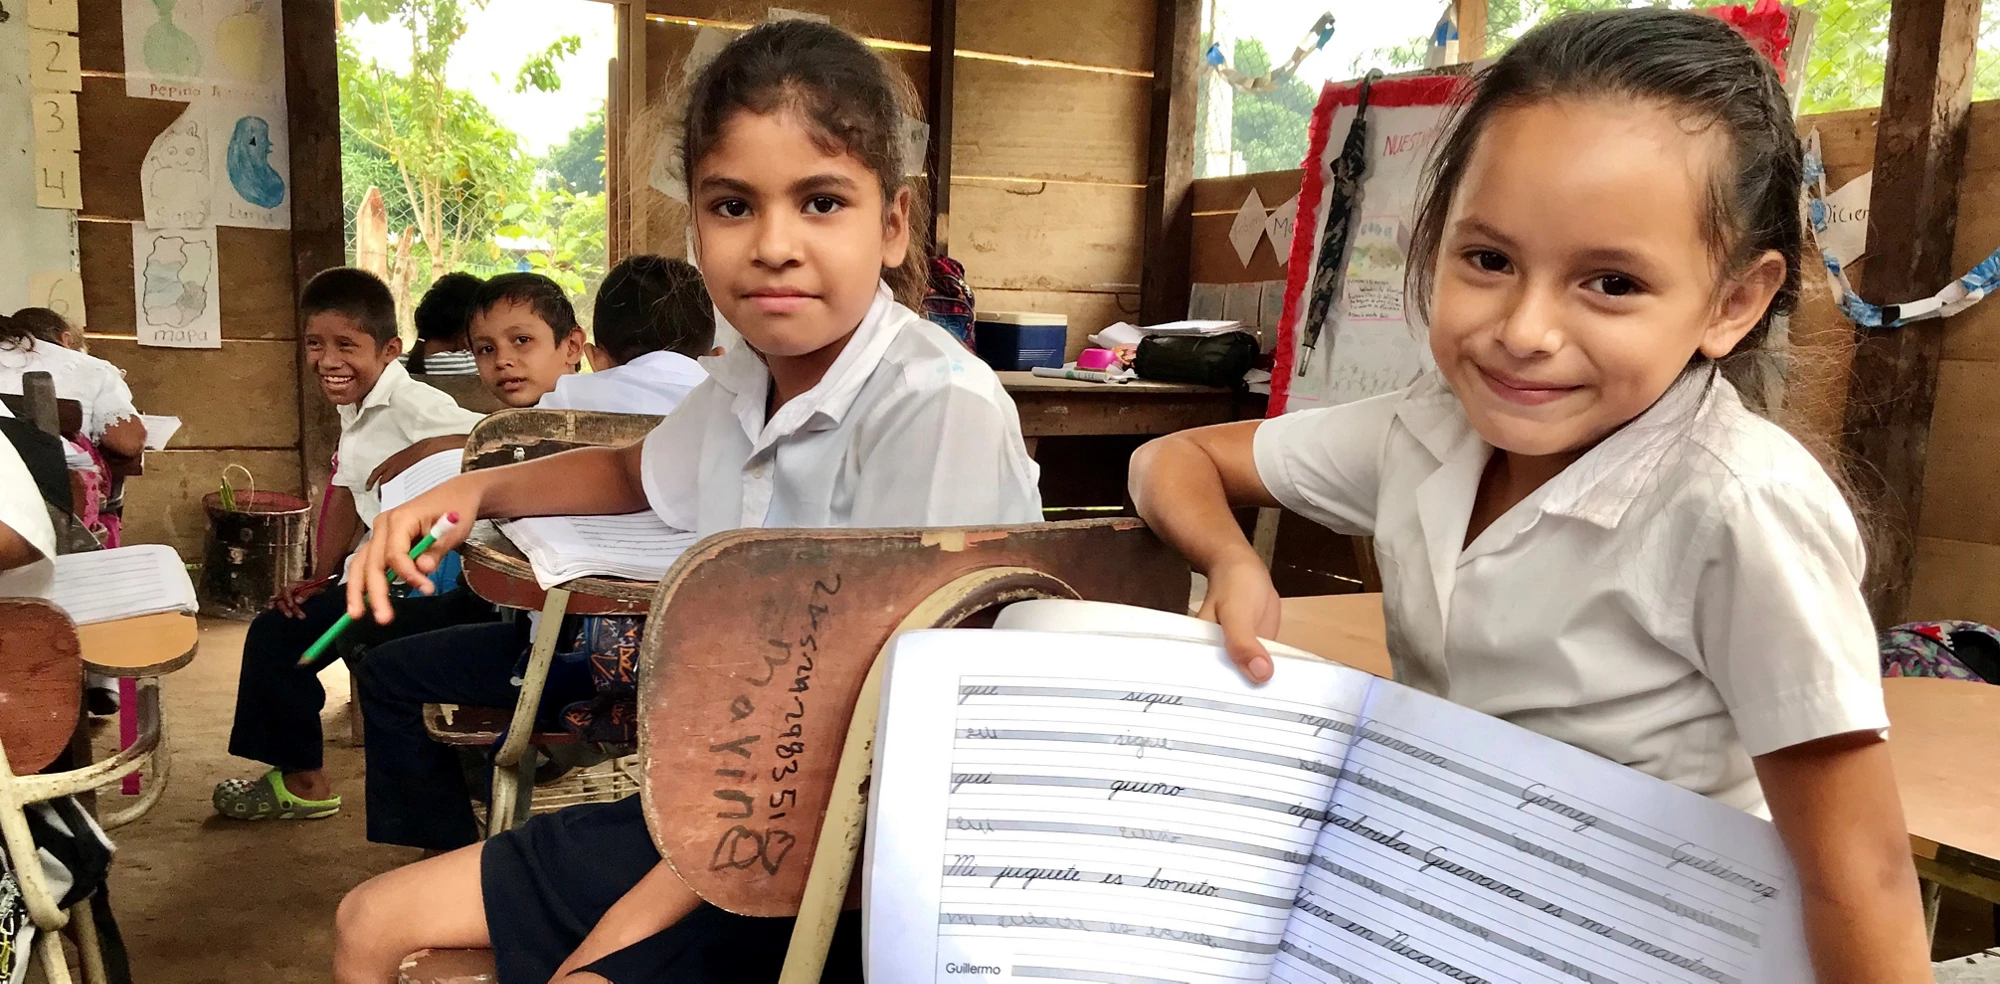 Children in a classroom in Nicaragua. Photo: © Jorge Antonio Bastino/World Bank